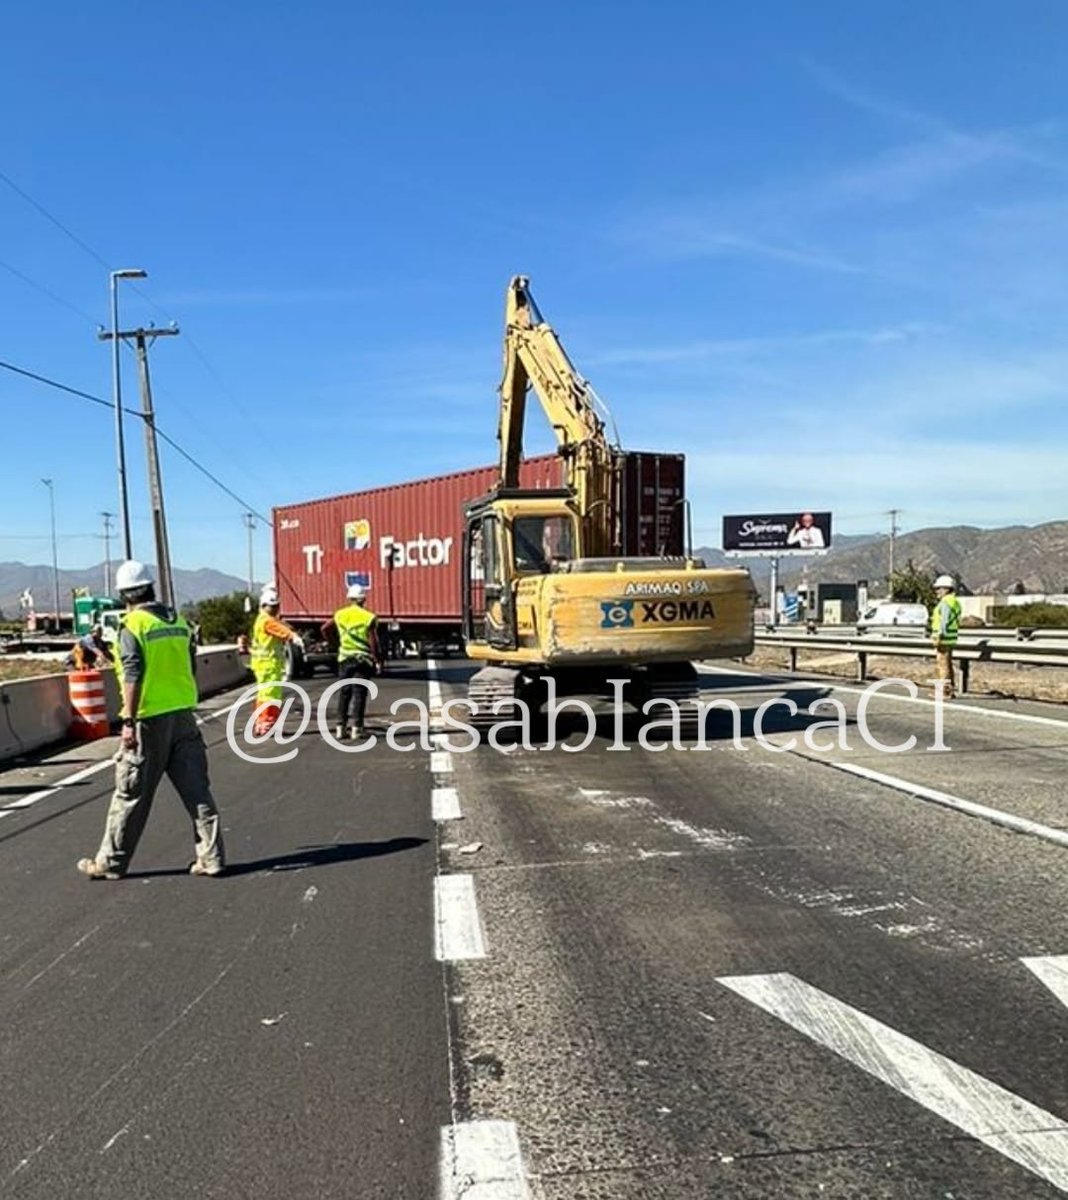 #Casablanca #accidente #Ruta68 km66/900 dirección #Valparaiso. Colisión de moto con camión.#Ruta cortada, desvío por #RutaF90 @INF0SCHILE @ChileInfo5 @djgraff_German @ViveCASABLANCA